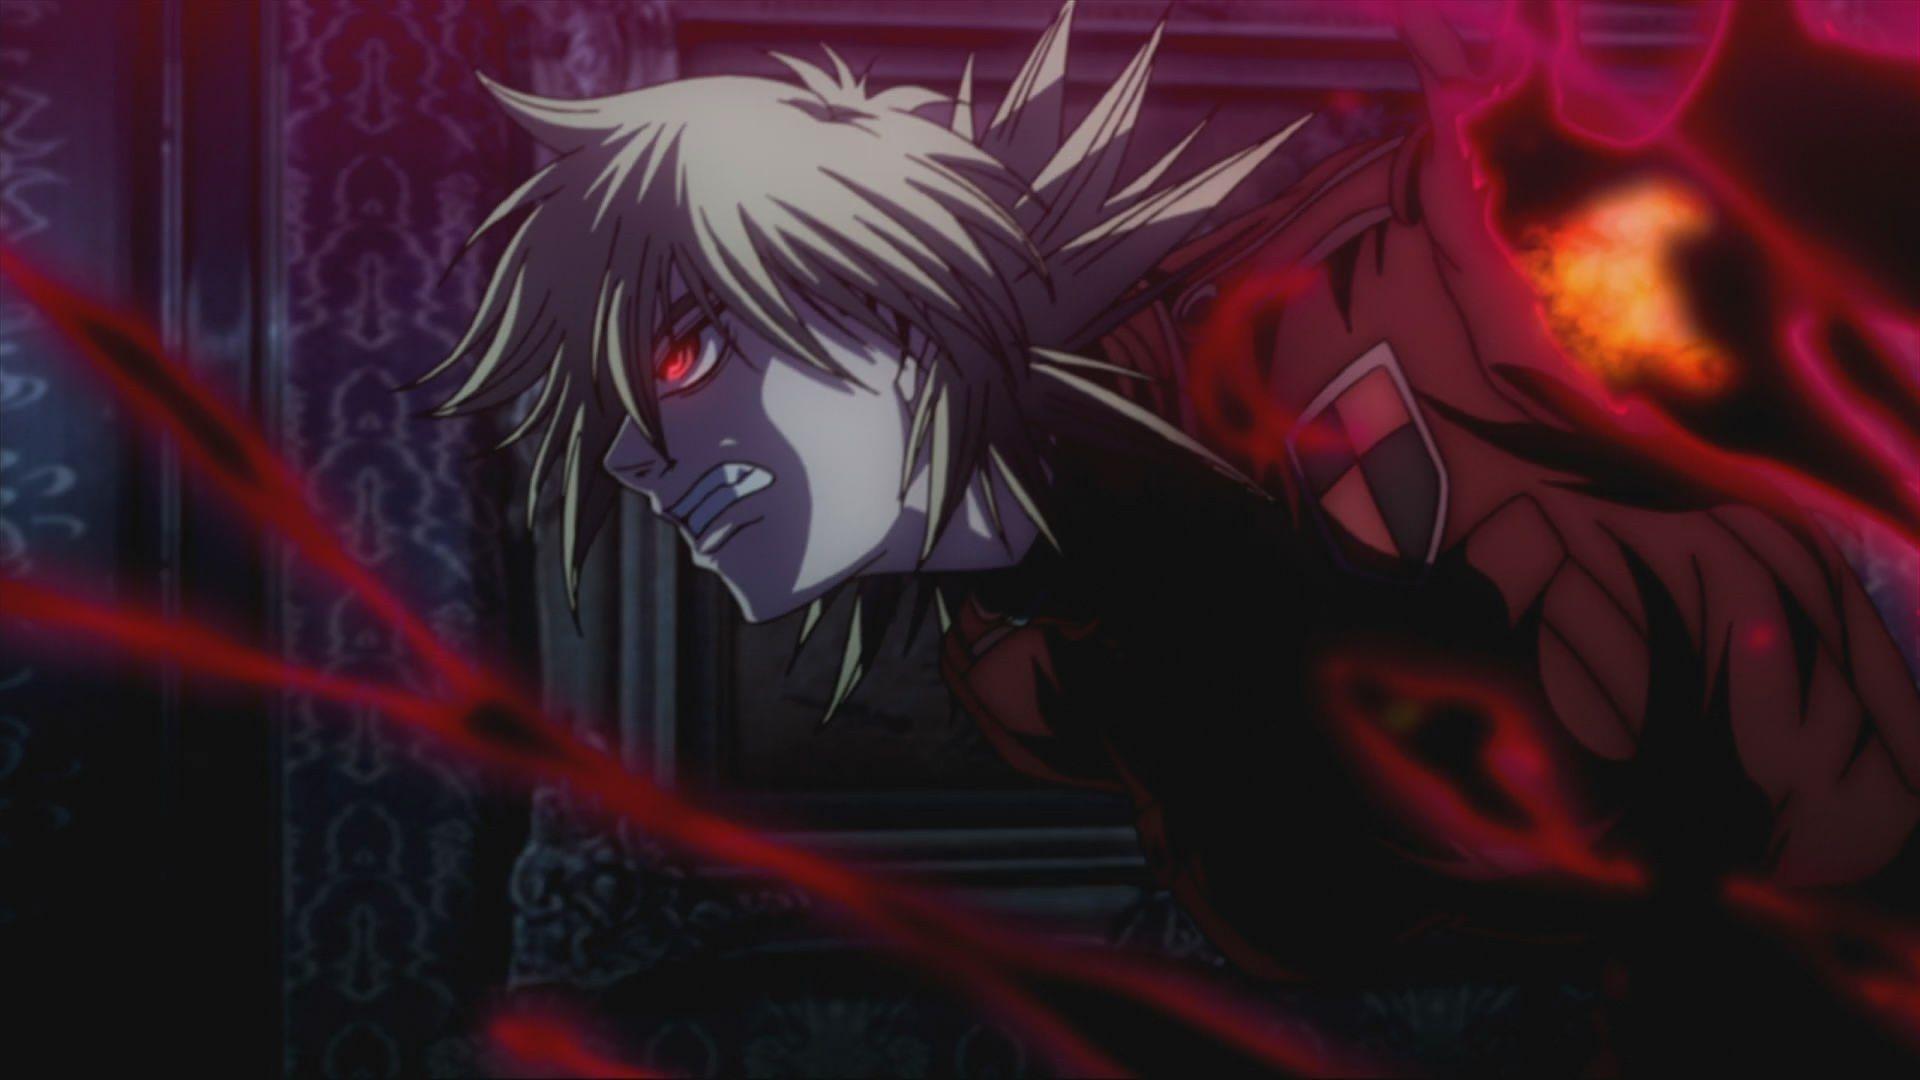 Blood C Death Scenes Wallpaper iPhone, Anime Wallpaper